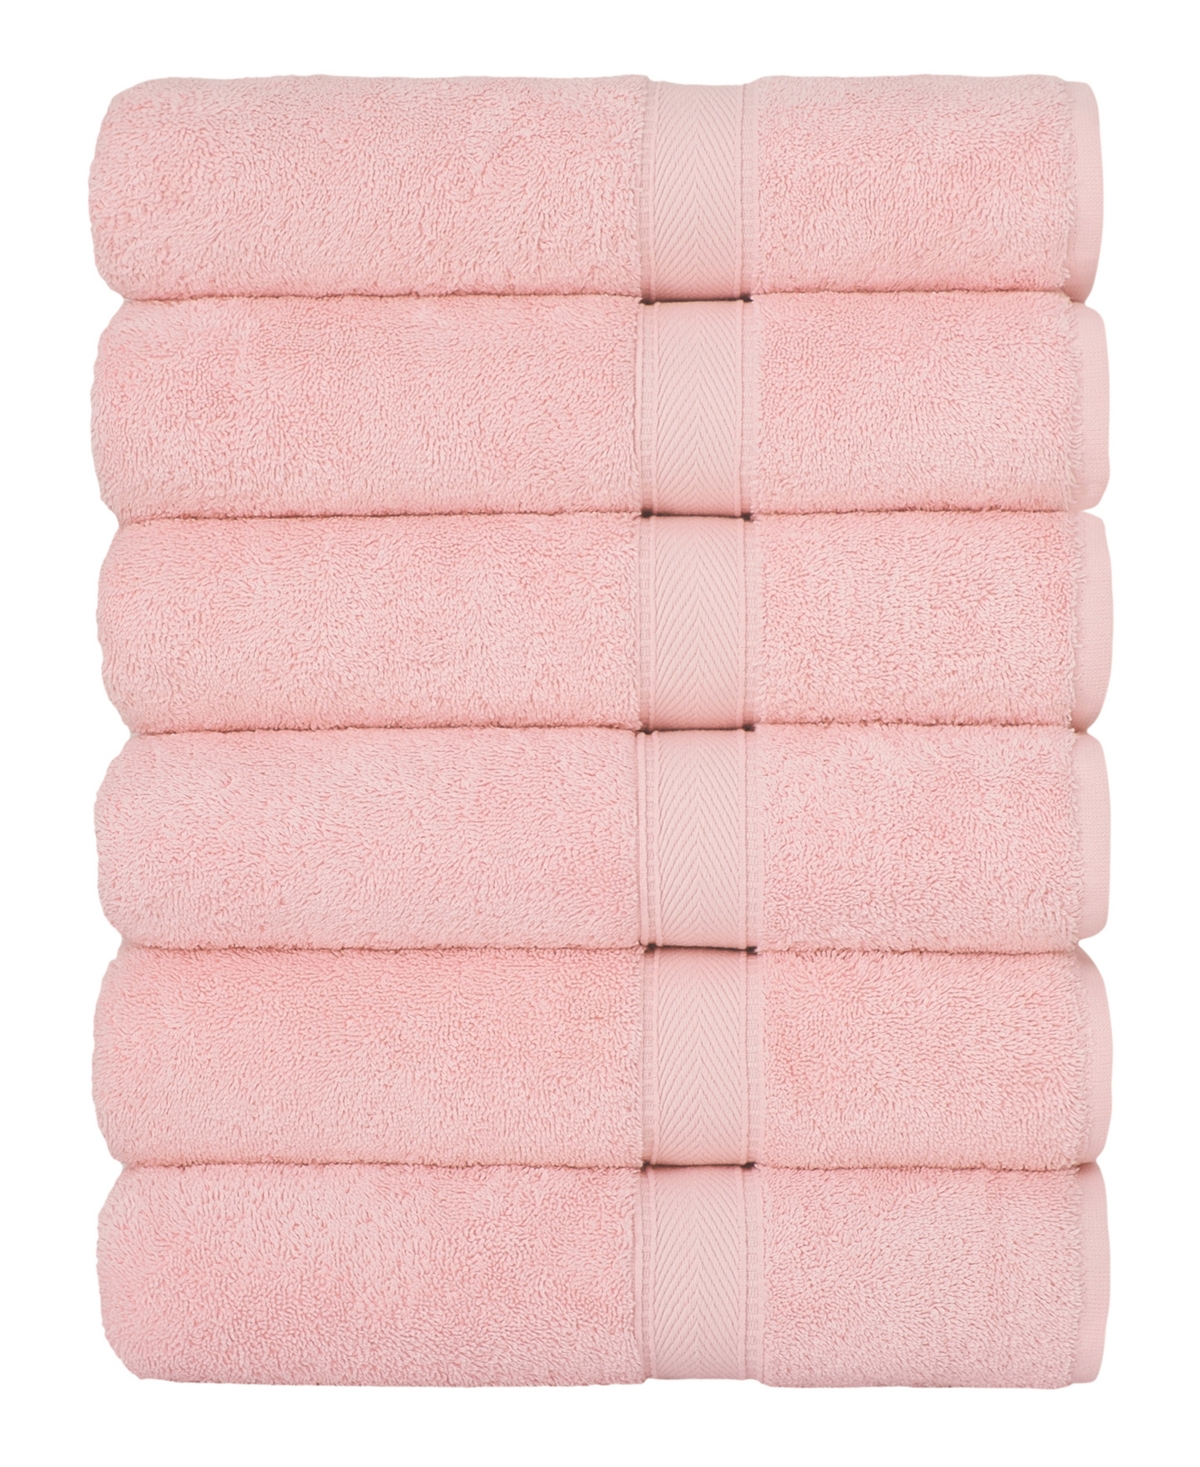 Linum Home Sinemis 6-pc. Bath Towel Set In Pink